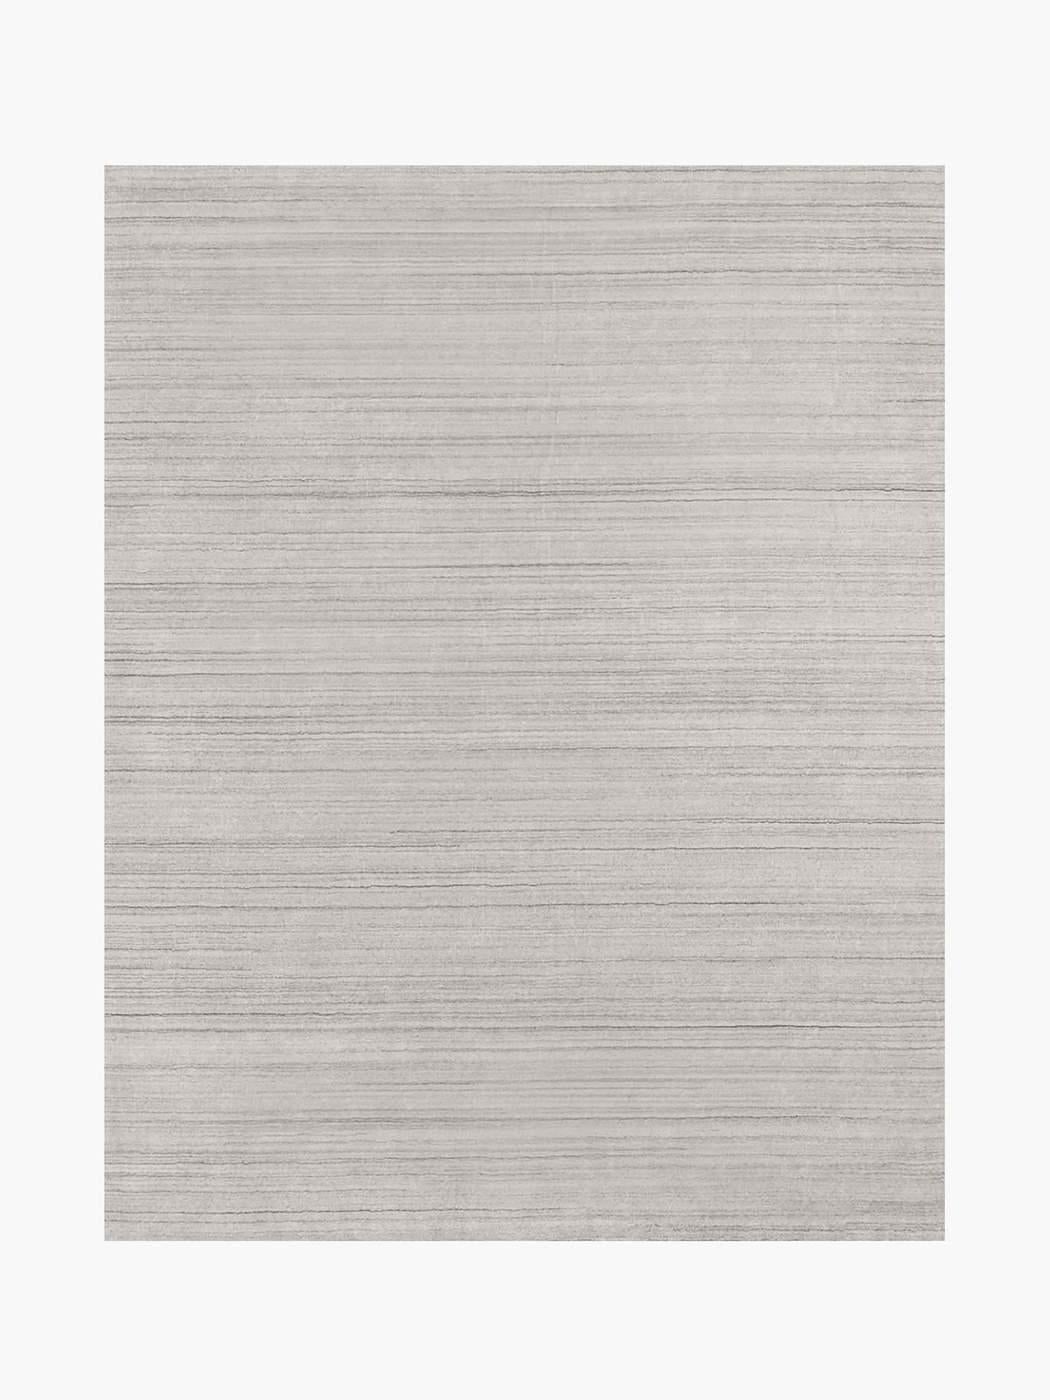 For Sale: Beige (Performance Savilla Sand) Ben Soleimani Performance Savilla Rug– Hand-knotted Medium Pile White 8'x10'